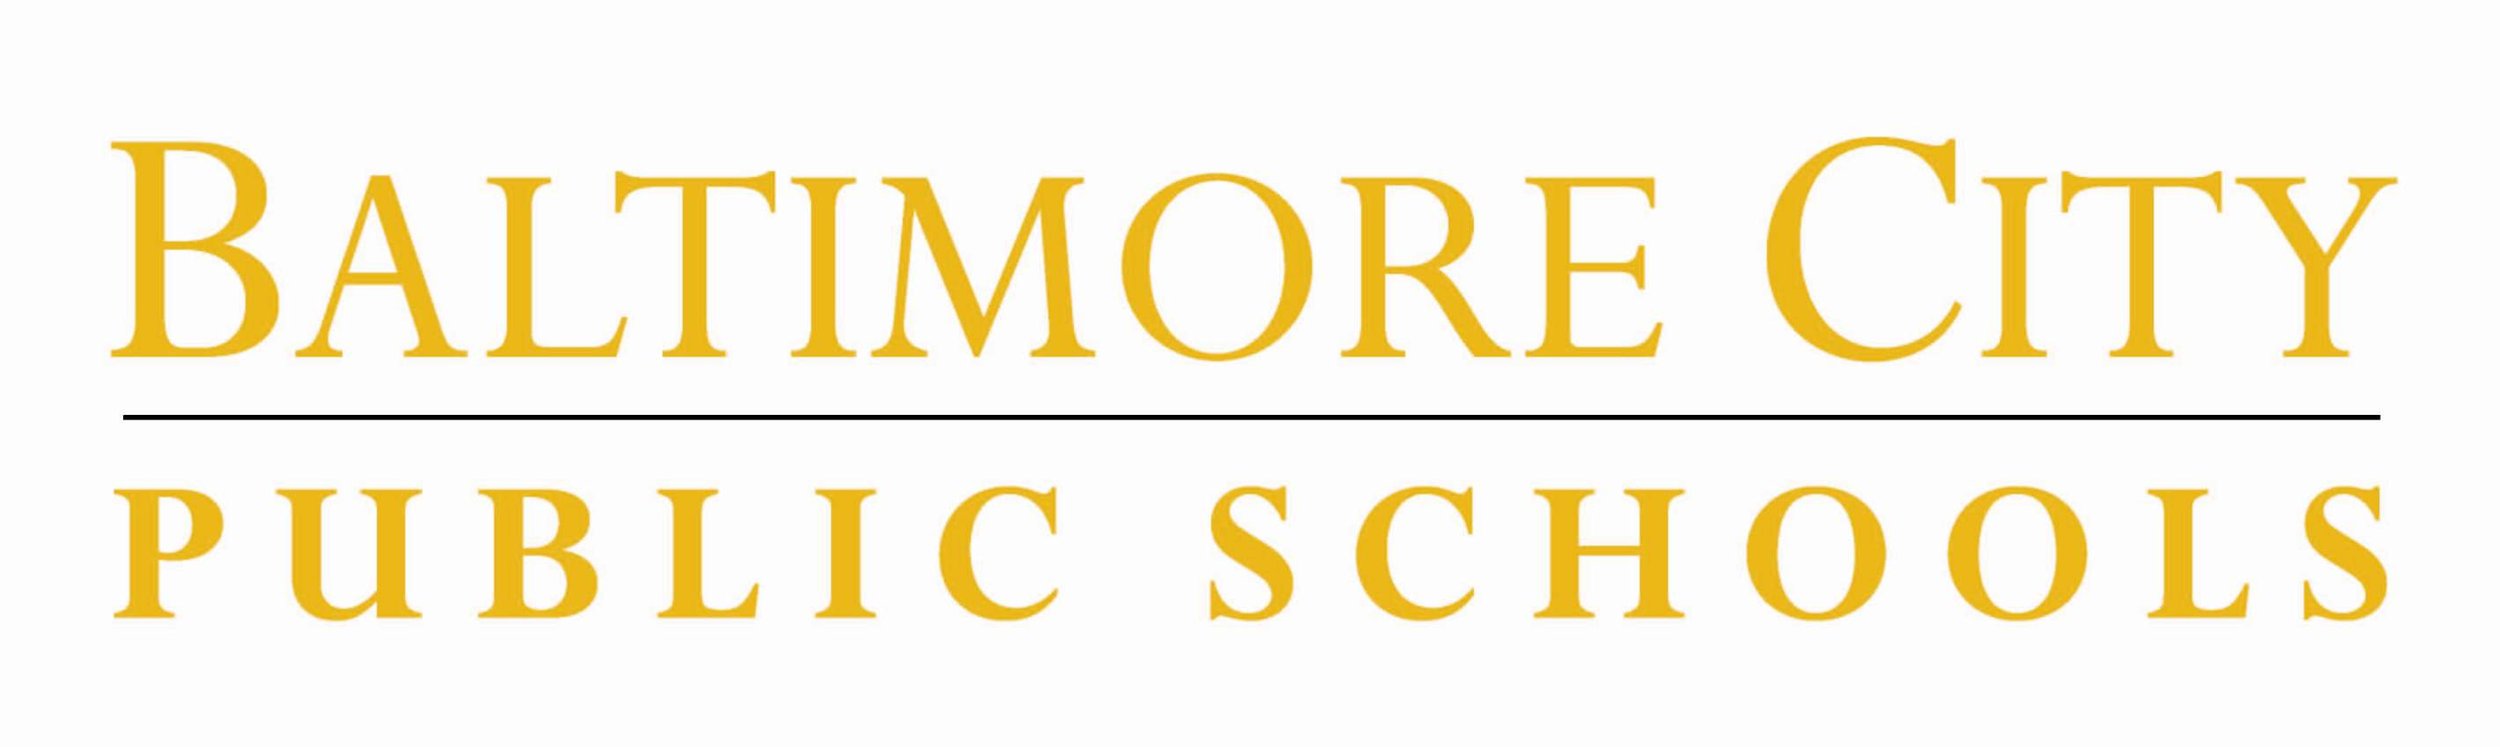 06 Baltimore_City_Public_Schools_logo.jpg